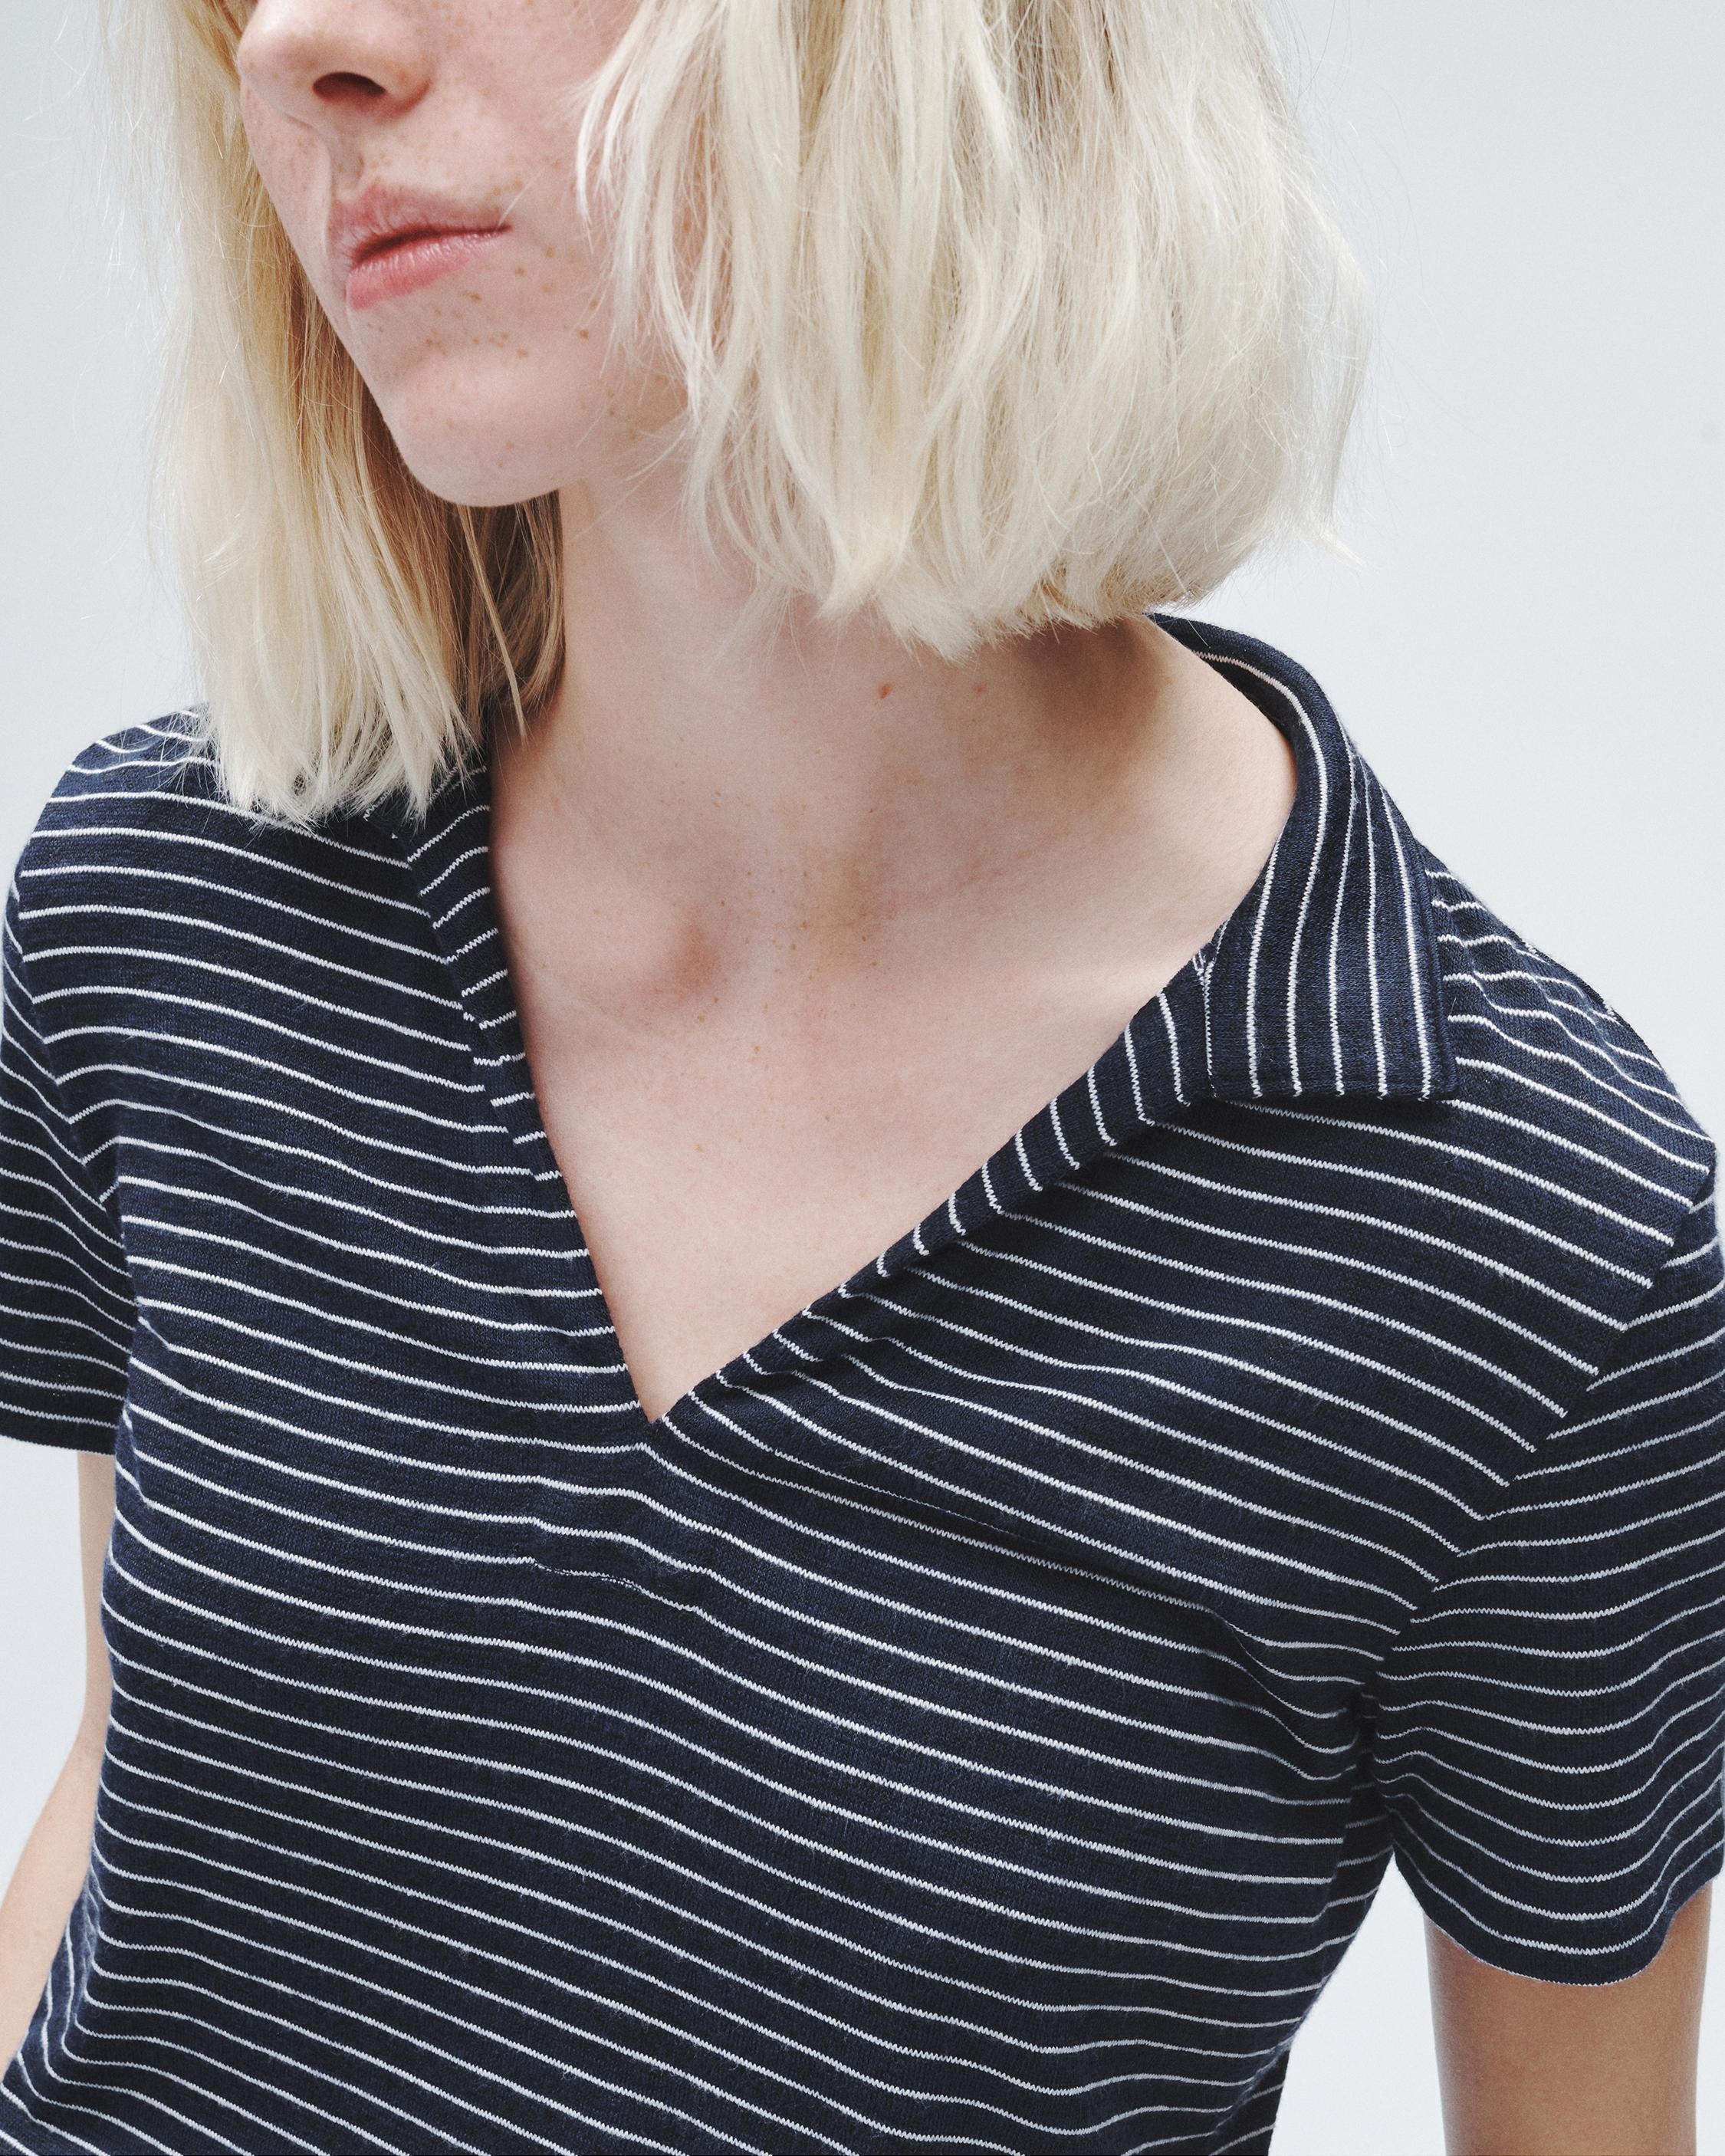 The Knit Striped Polo
Pima Cotton T-Shirt - 6